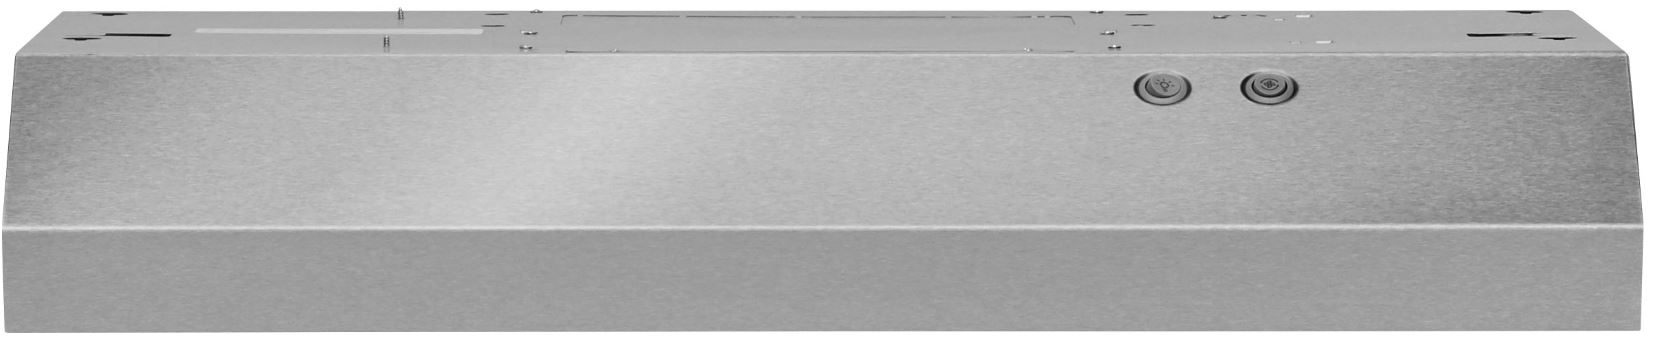 Maytag® 30" Stainless Steel Under Cabinet Range Hood